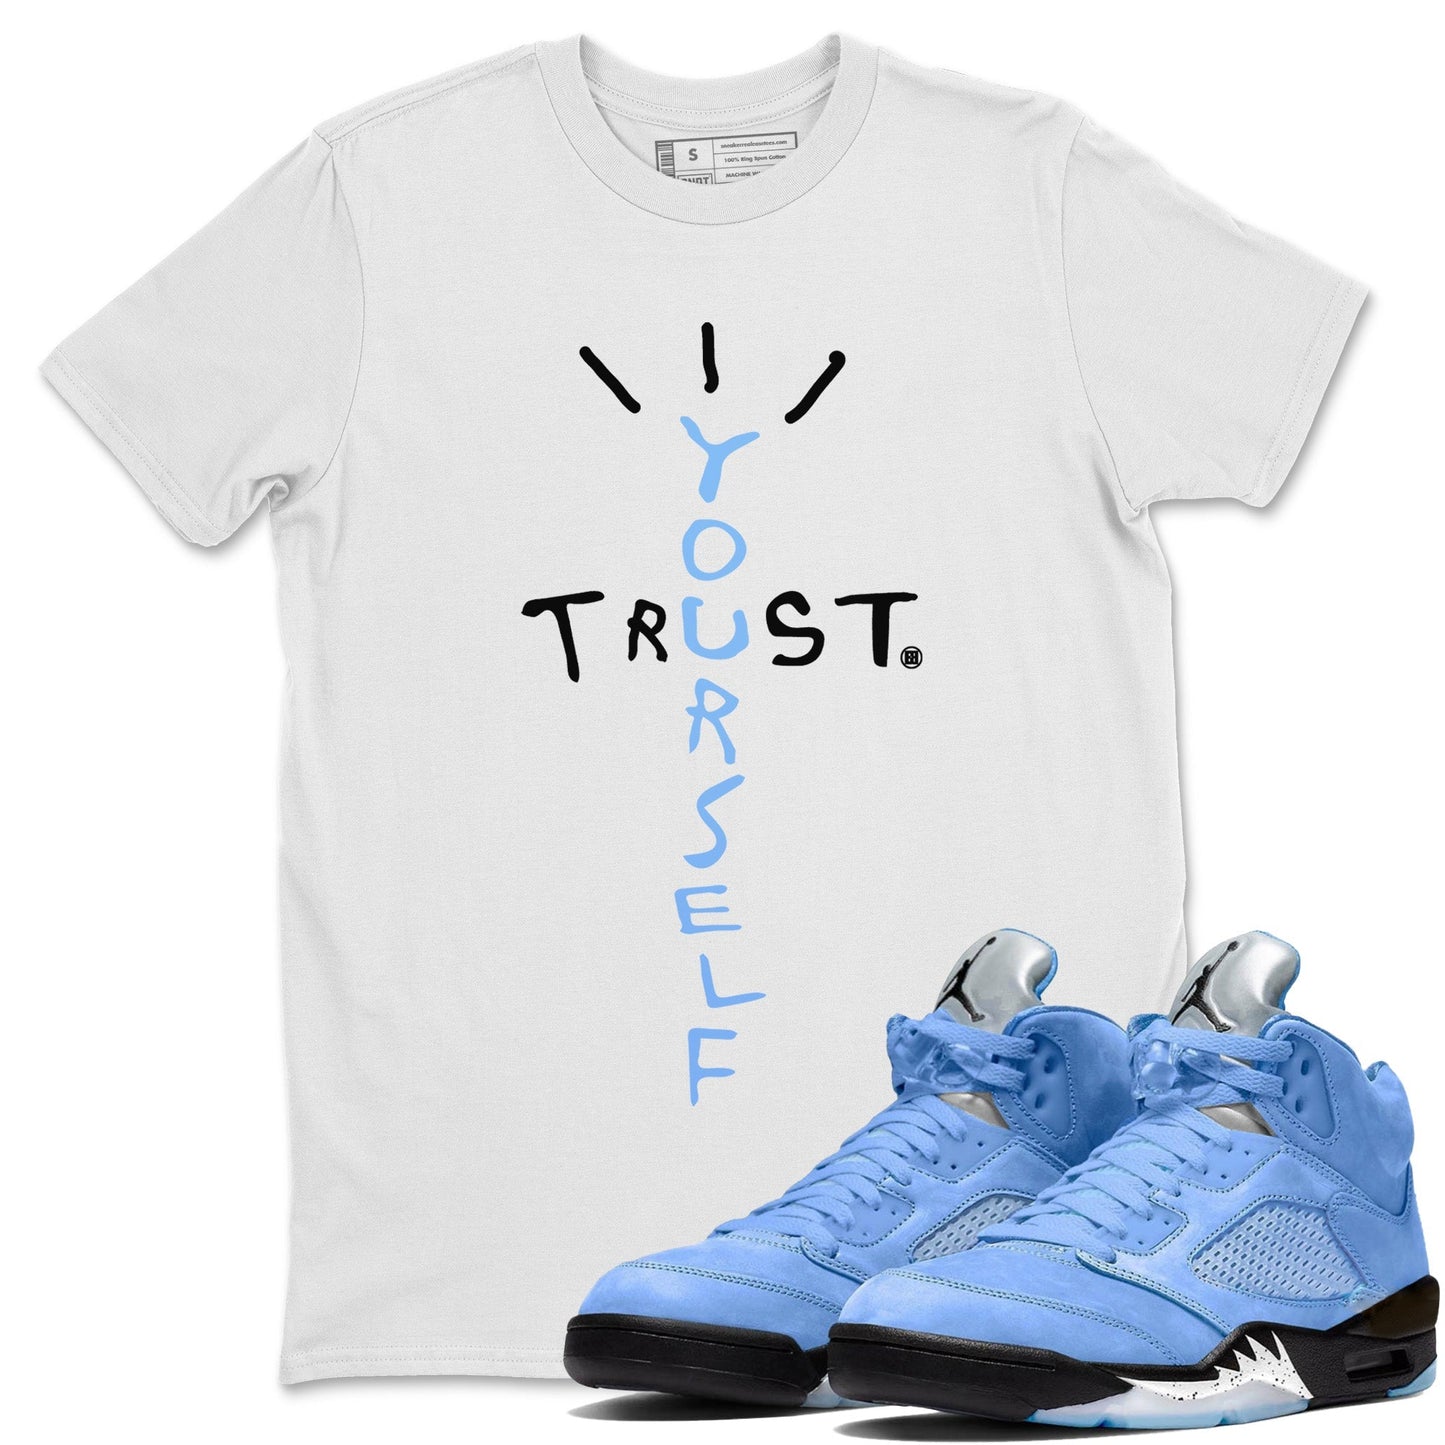 Air Jordan 5 UNC Shirt To Match Jordans Trust Yourself Sneaker Tees Air Jordan 5 Retro UNC Drip Gear Zone Sneaker Matching Clothing Unisex Shirts White 1